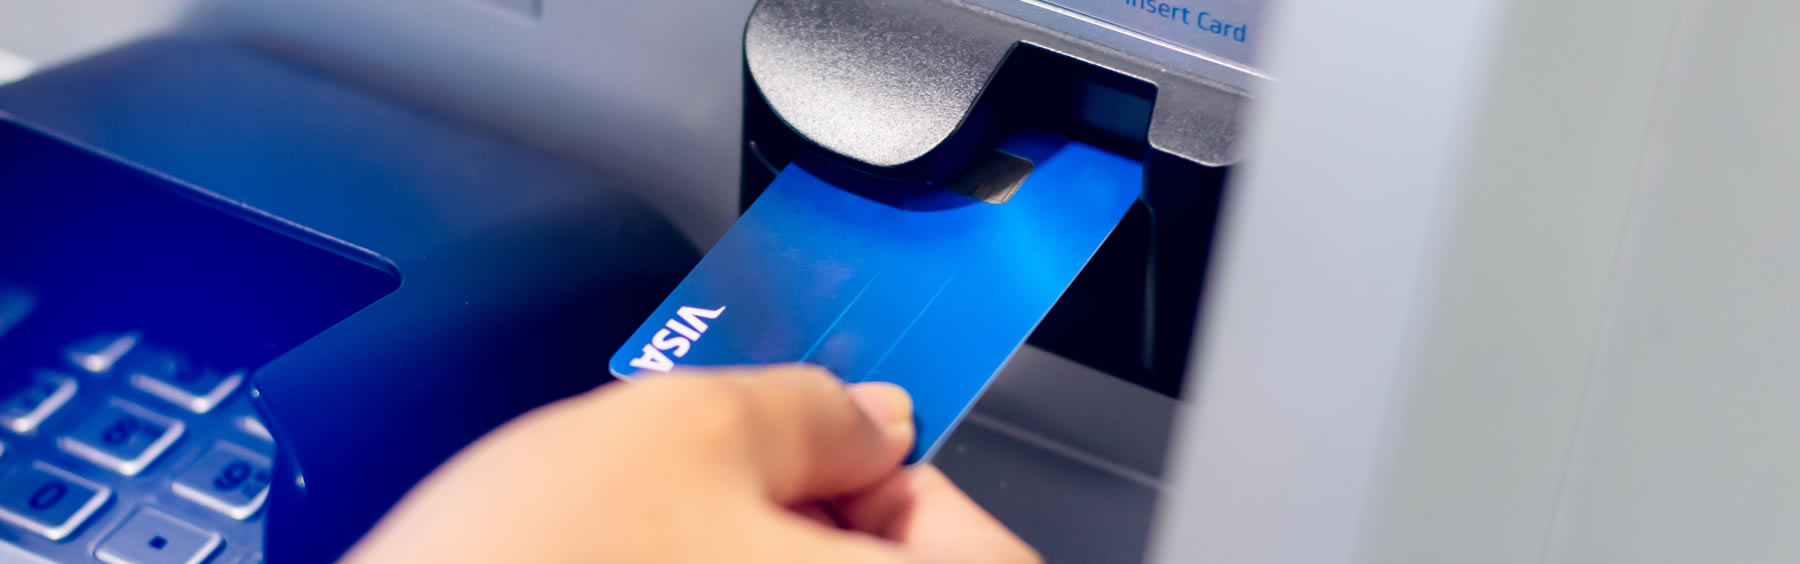 Funds Access Inc - Providing ATM Services